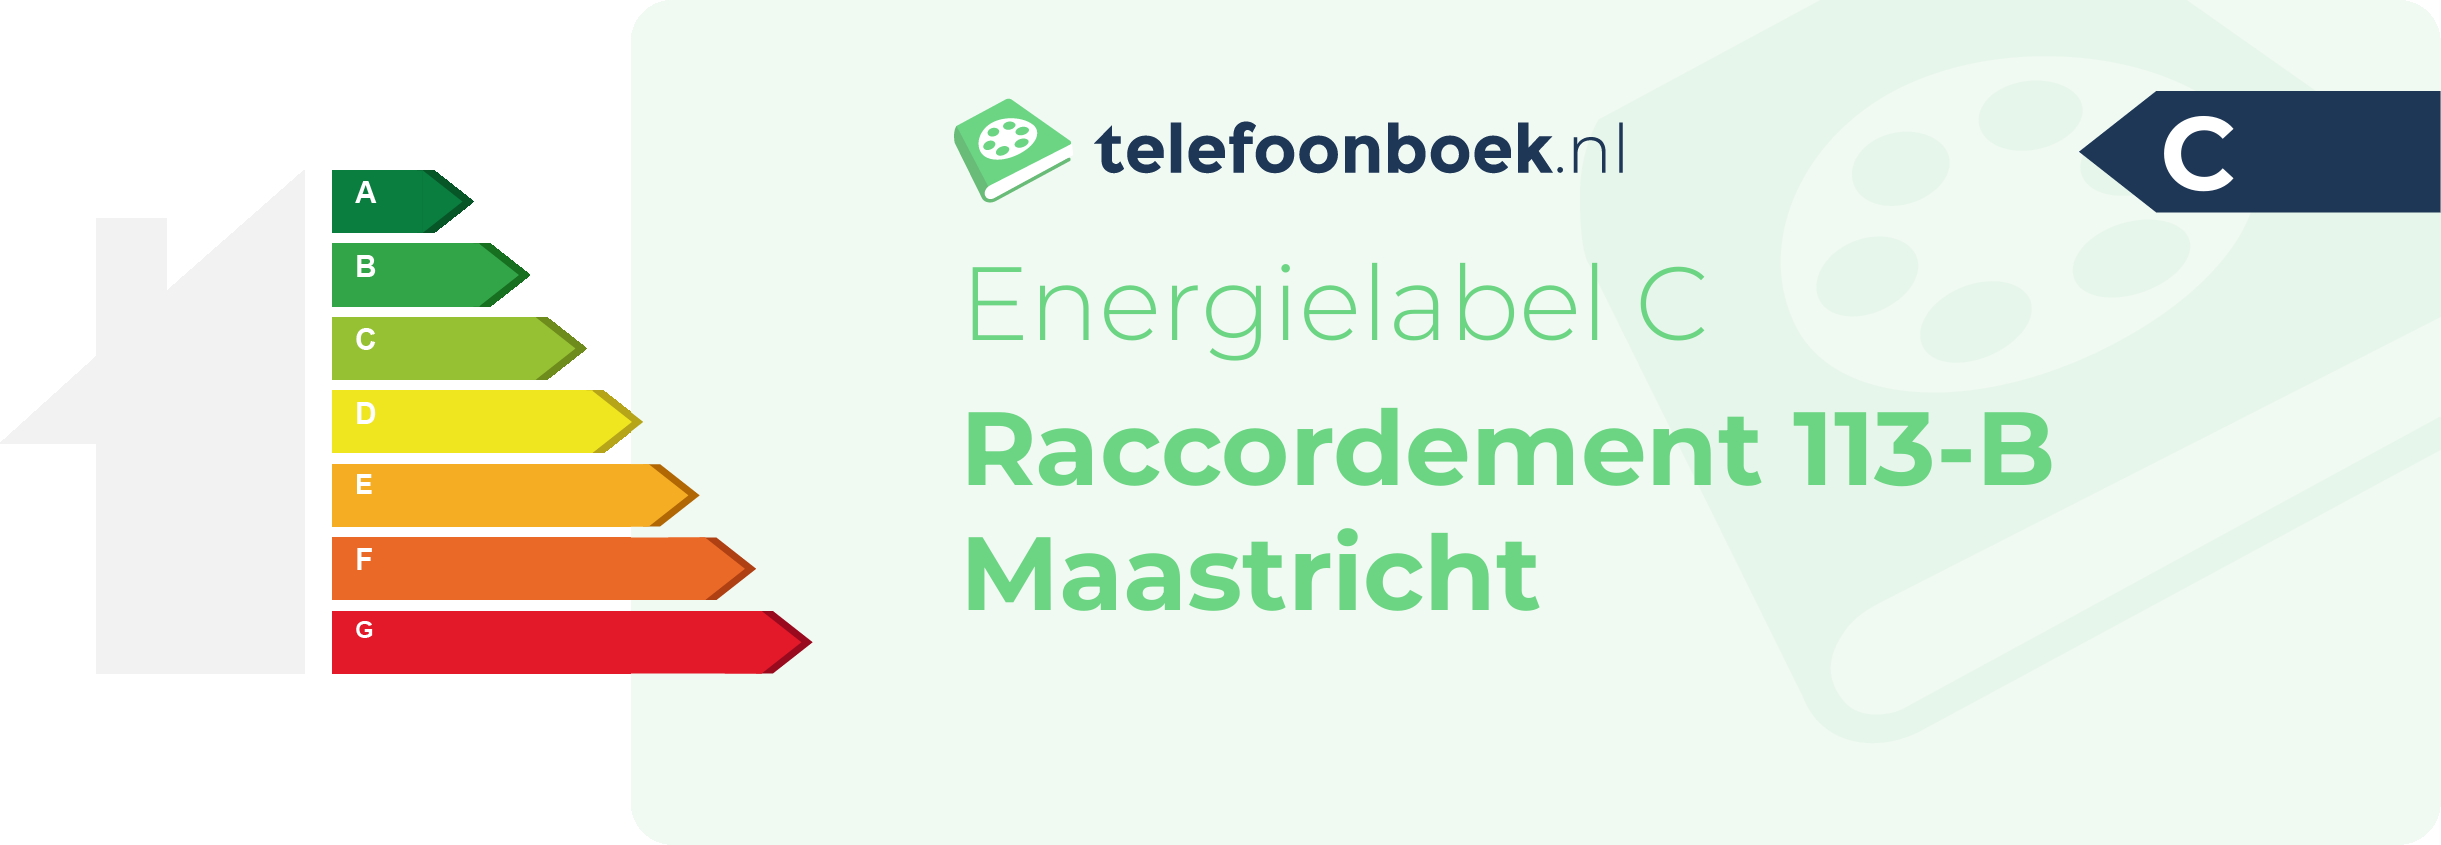 Energielabel Raccordement 113-B Maastricht